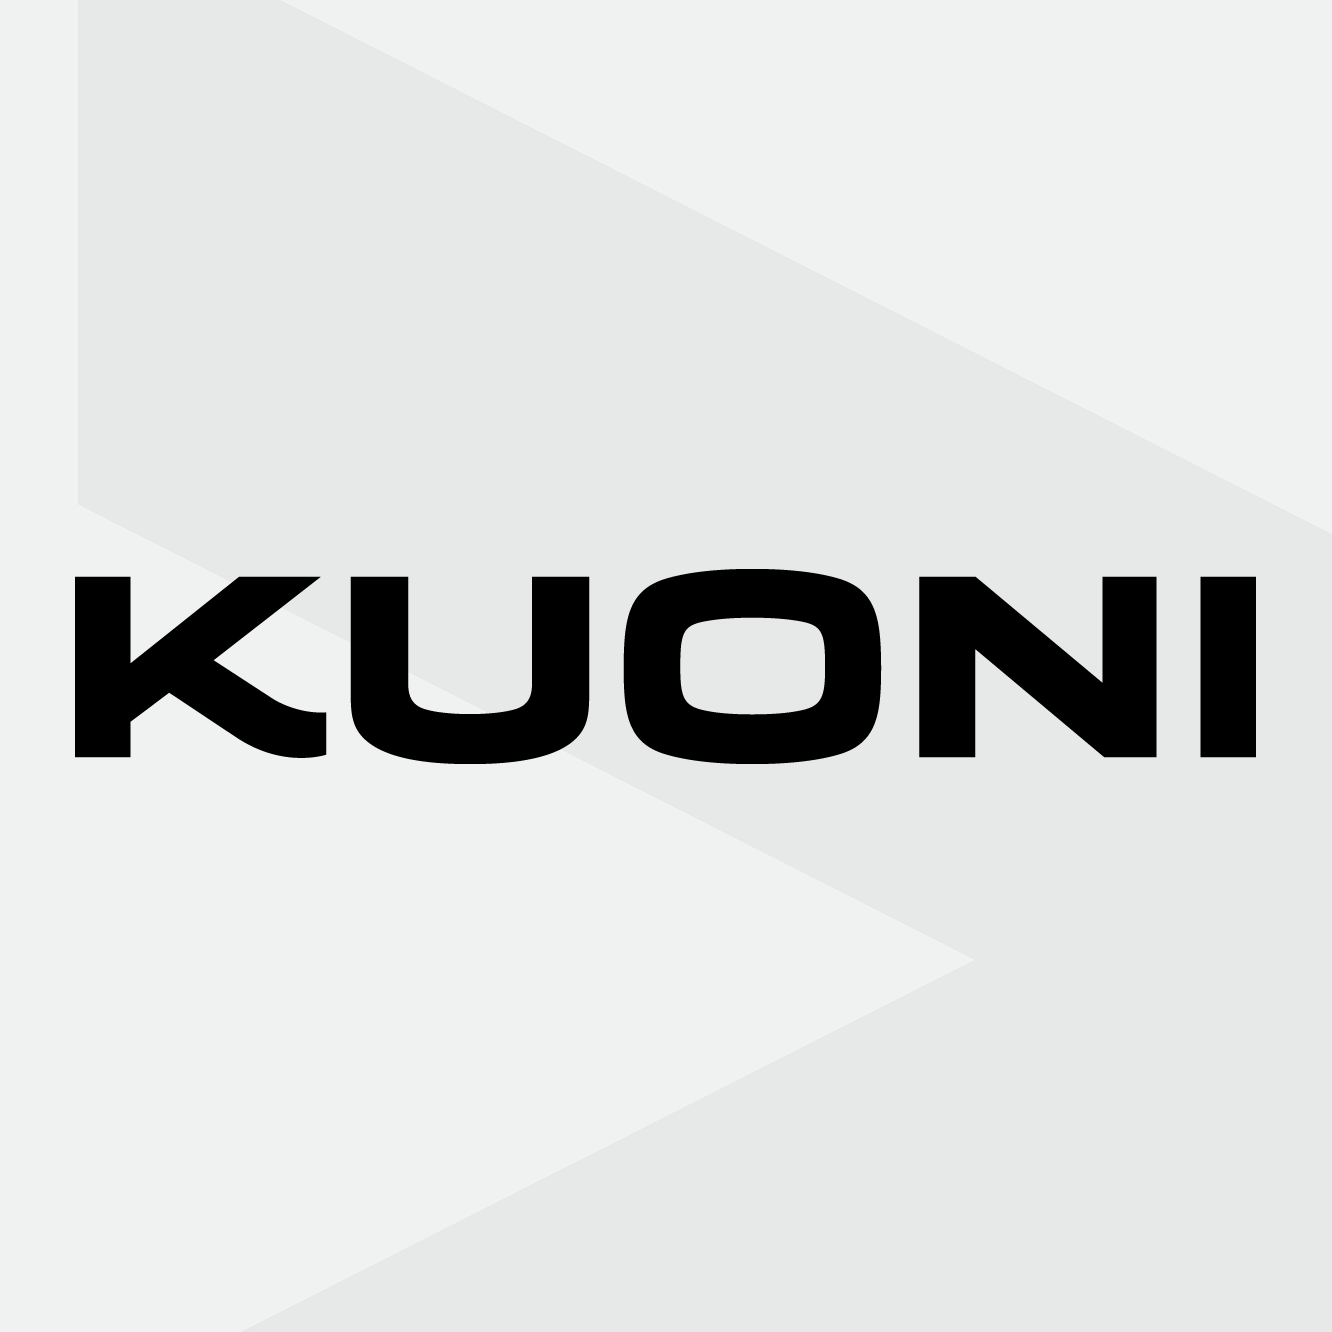 Kuoni case study